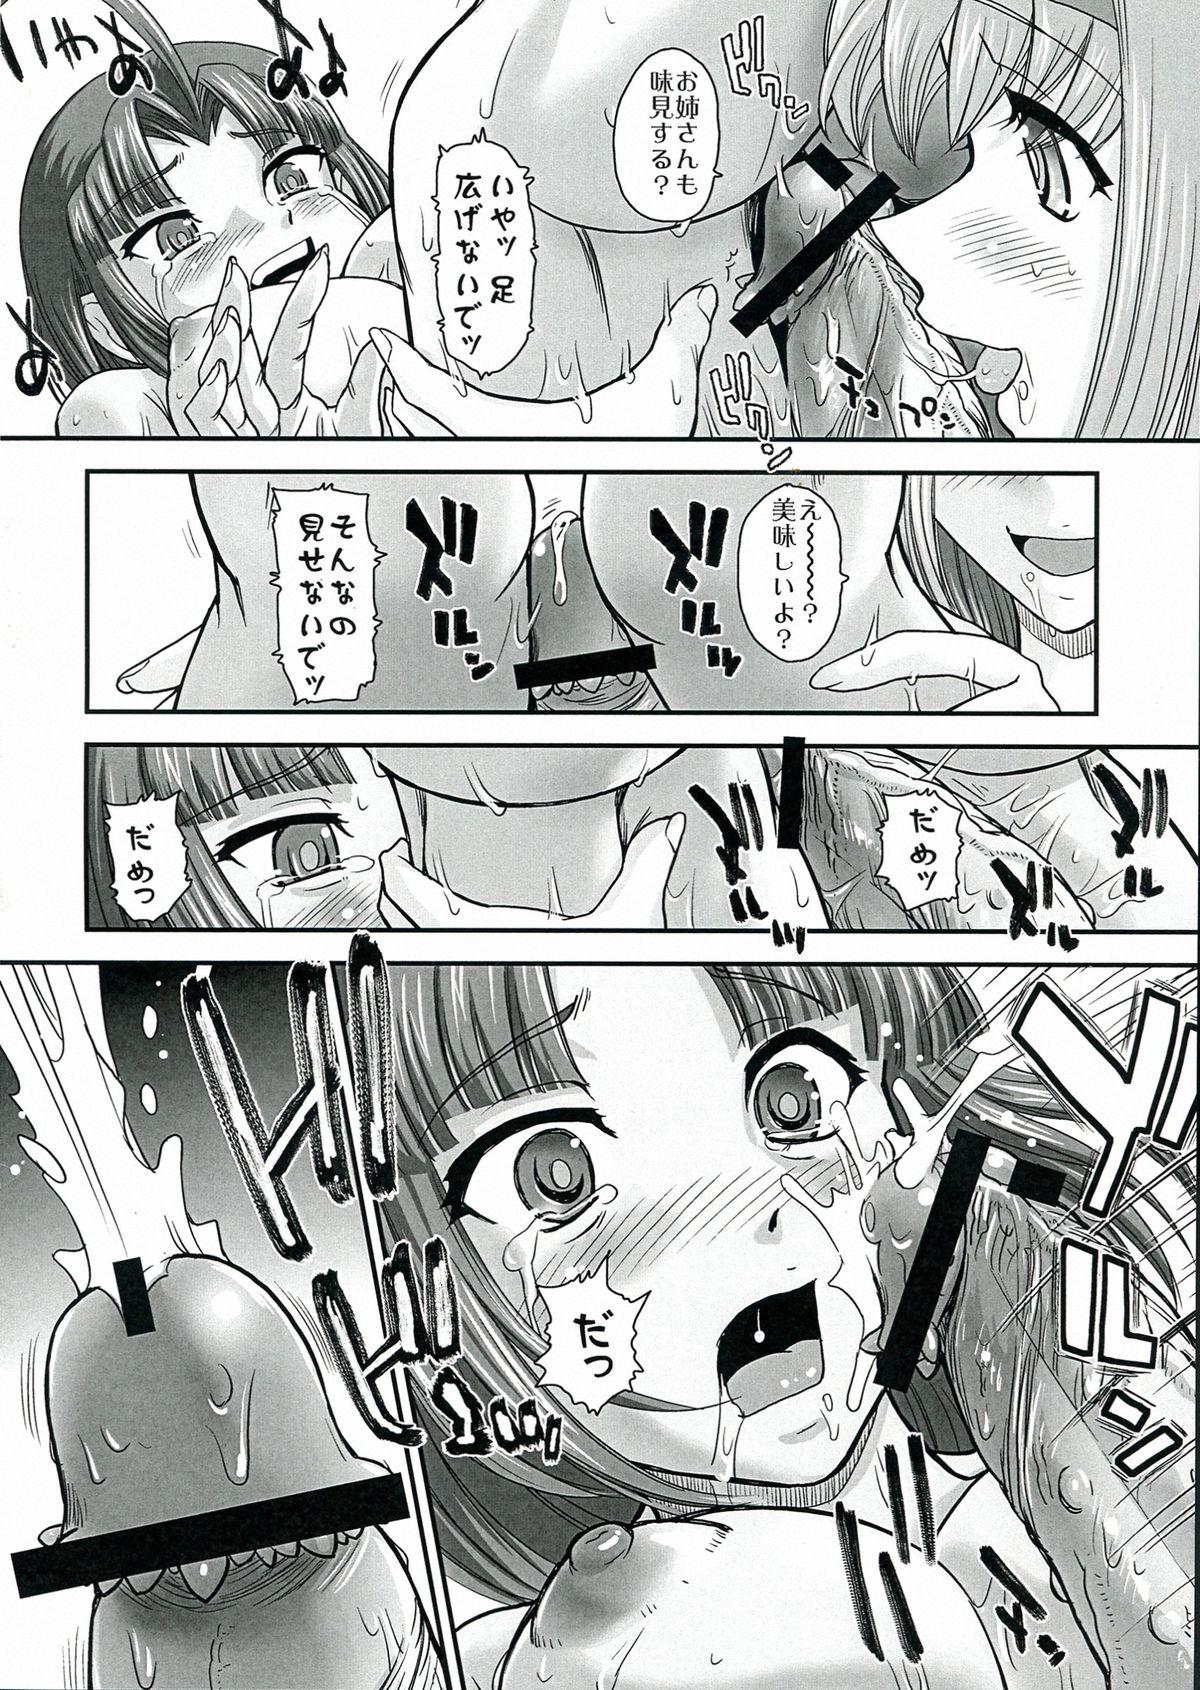 Sucking Dicks BehindMoon Recycle 3 - Space battleship yamato Ass Licking - Page 10